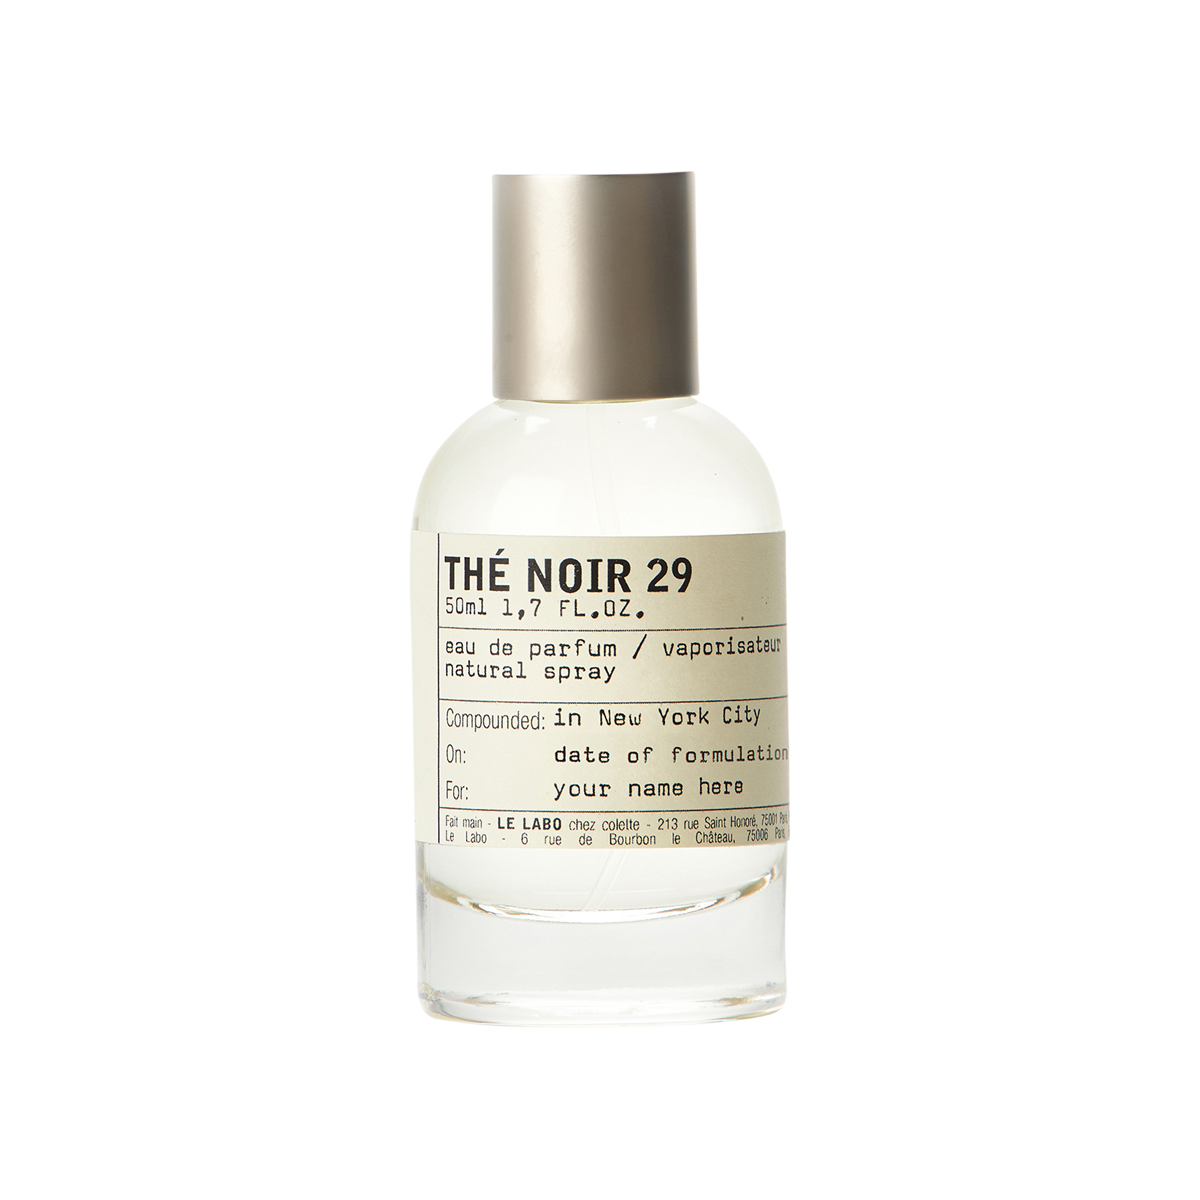 Le Labo fragrances - The Noir 29 Perfume